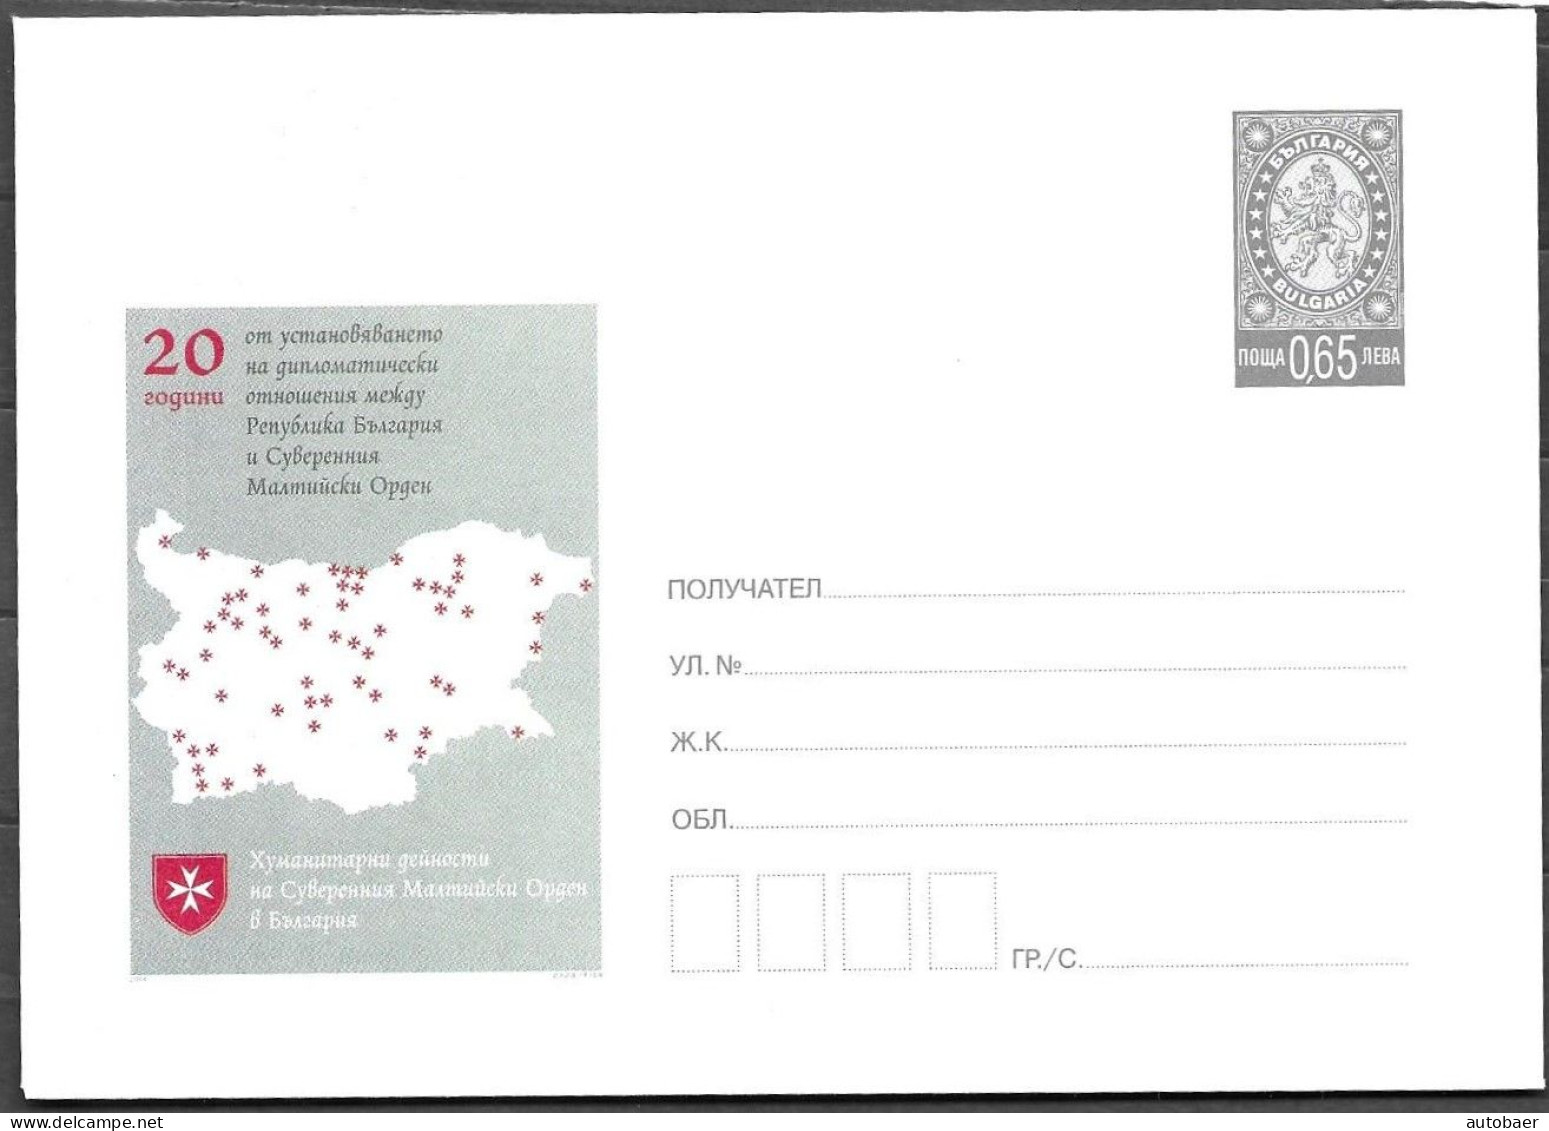 Bulgaria Bulgarie Bulgarien Envelope 2014 Diplomatic Relations With Order Of Malta ** MNH Neuf Postfrisch - Enveloppes